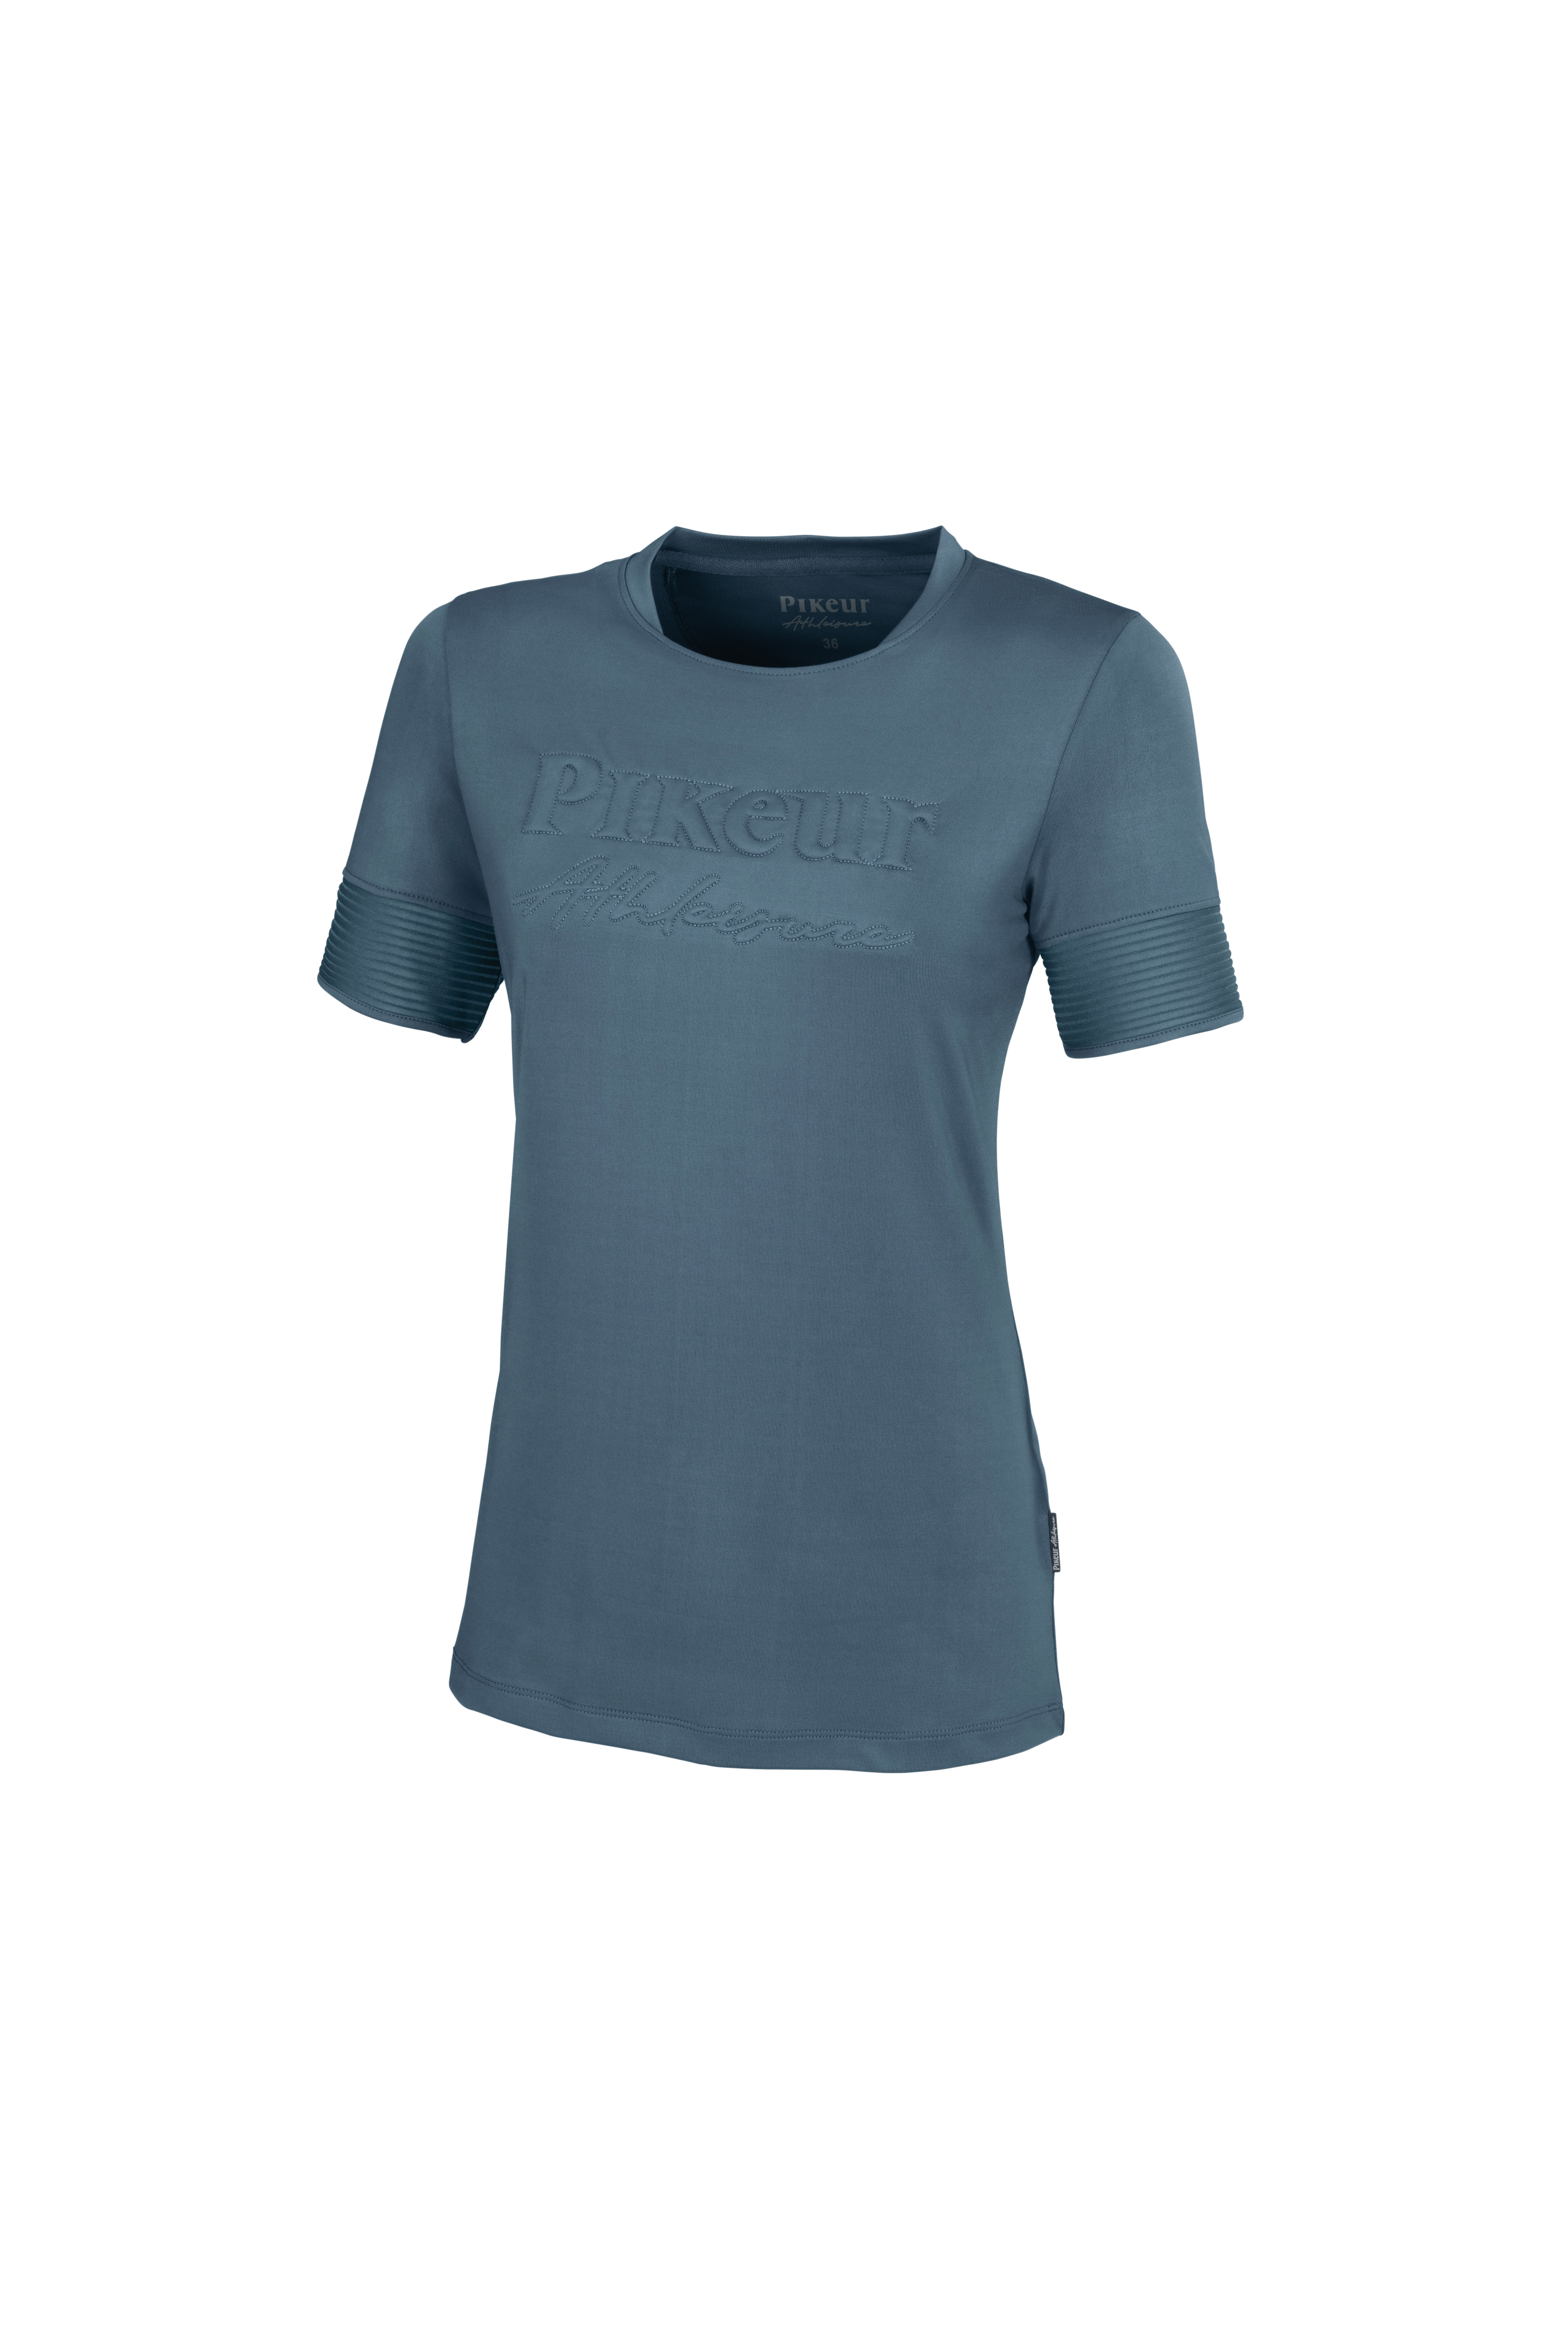 Shirt LOA, Damen, Athleisure 22, vintage blue